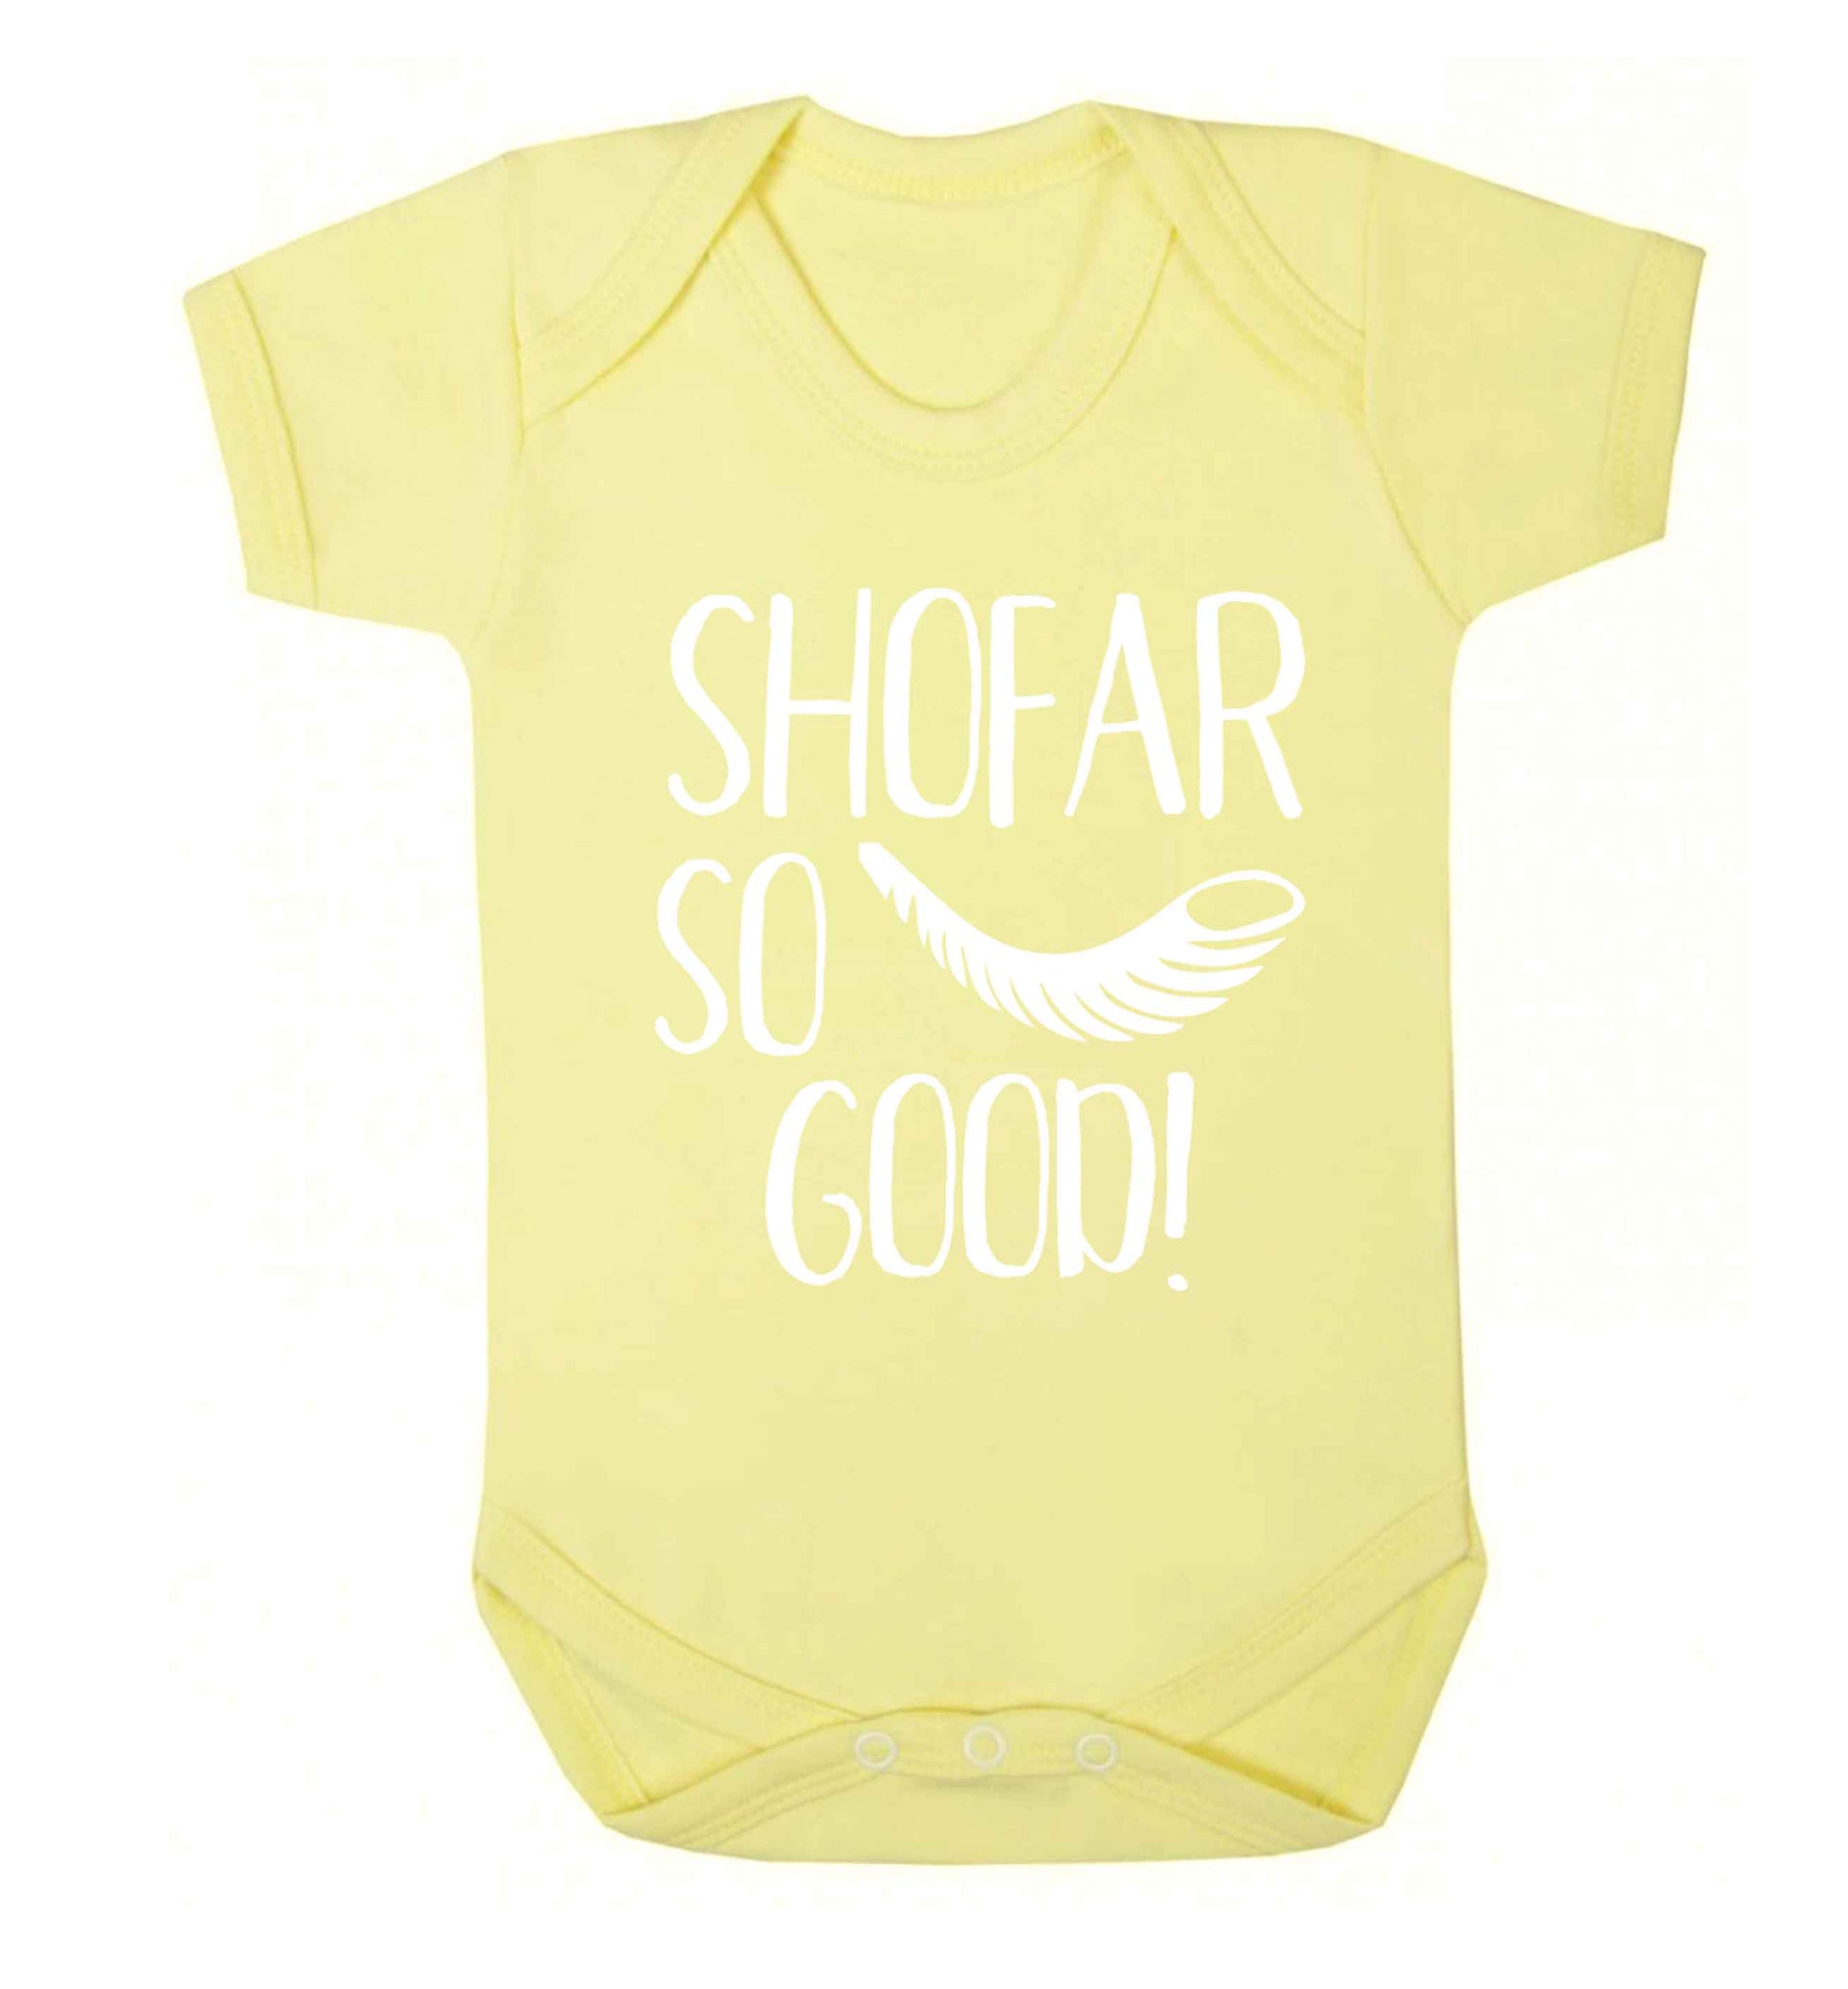 Shofar so good! Baby Vest pale yellow 18-24 months